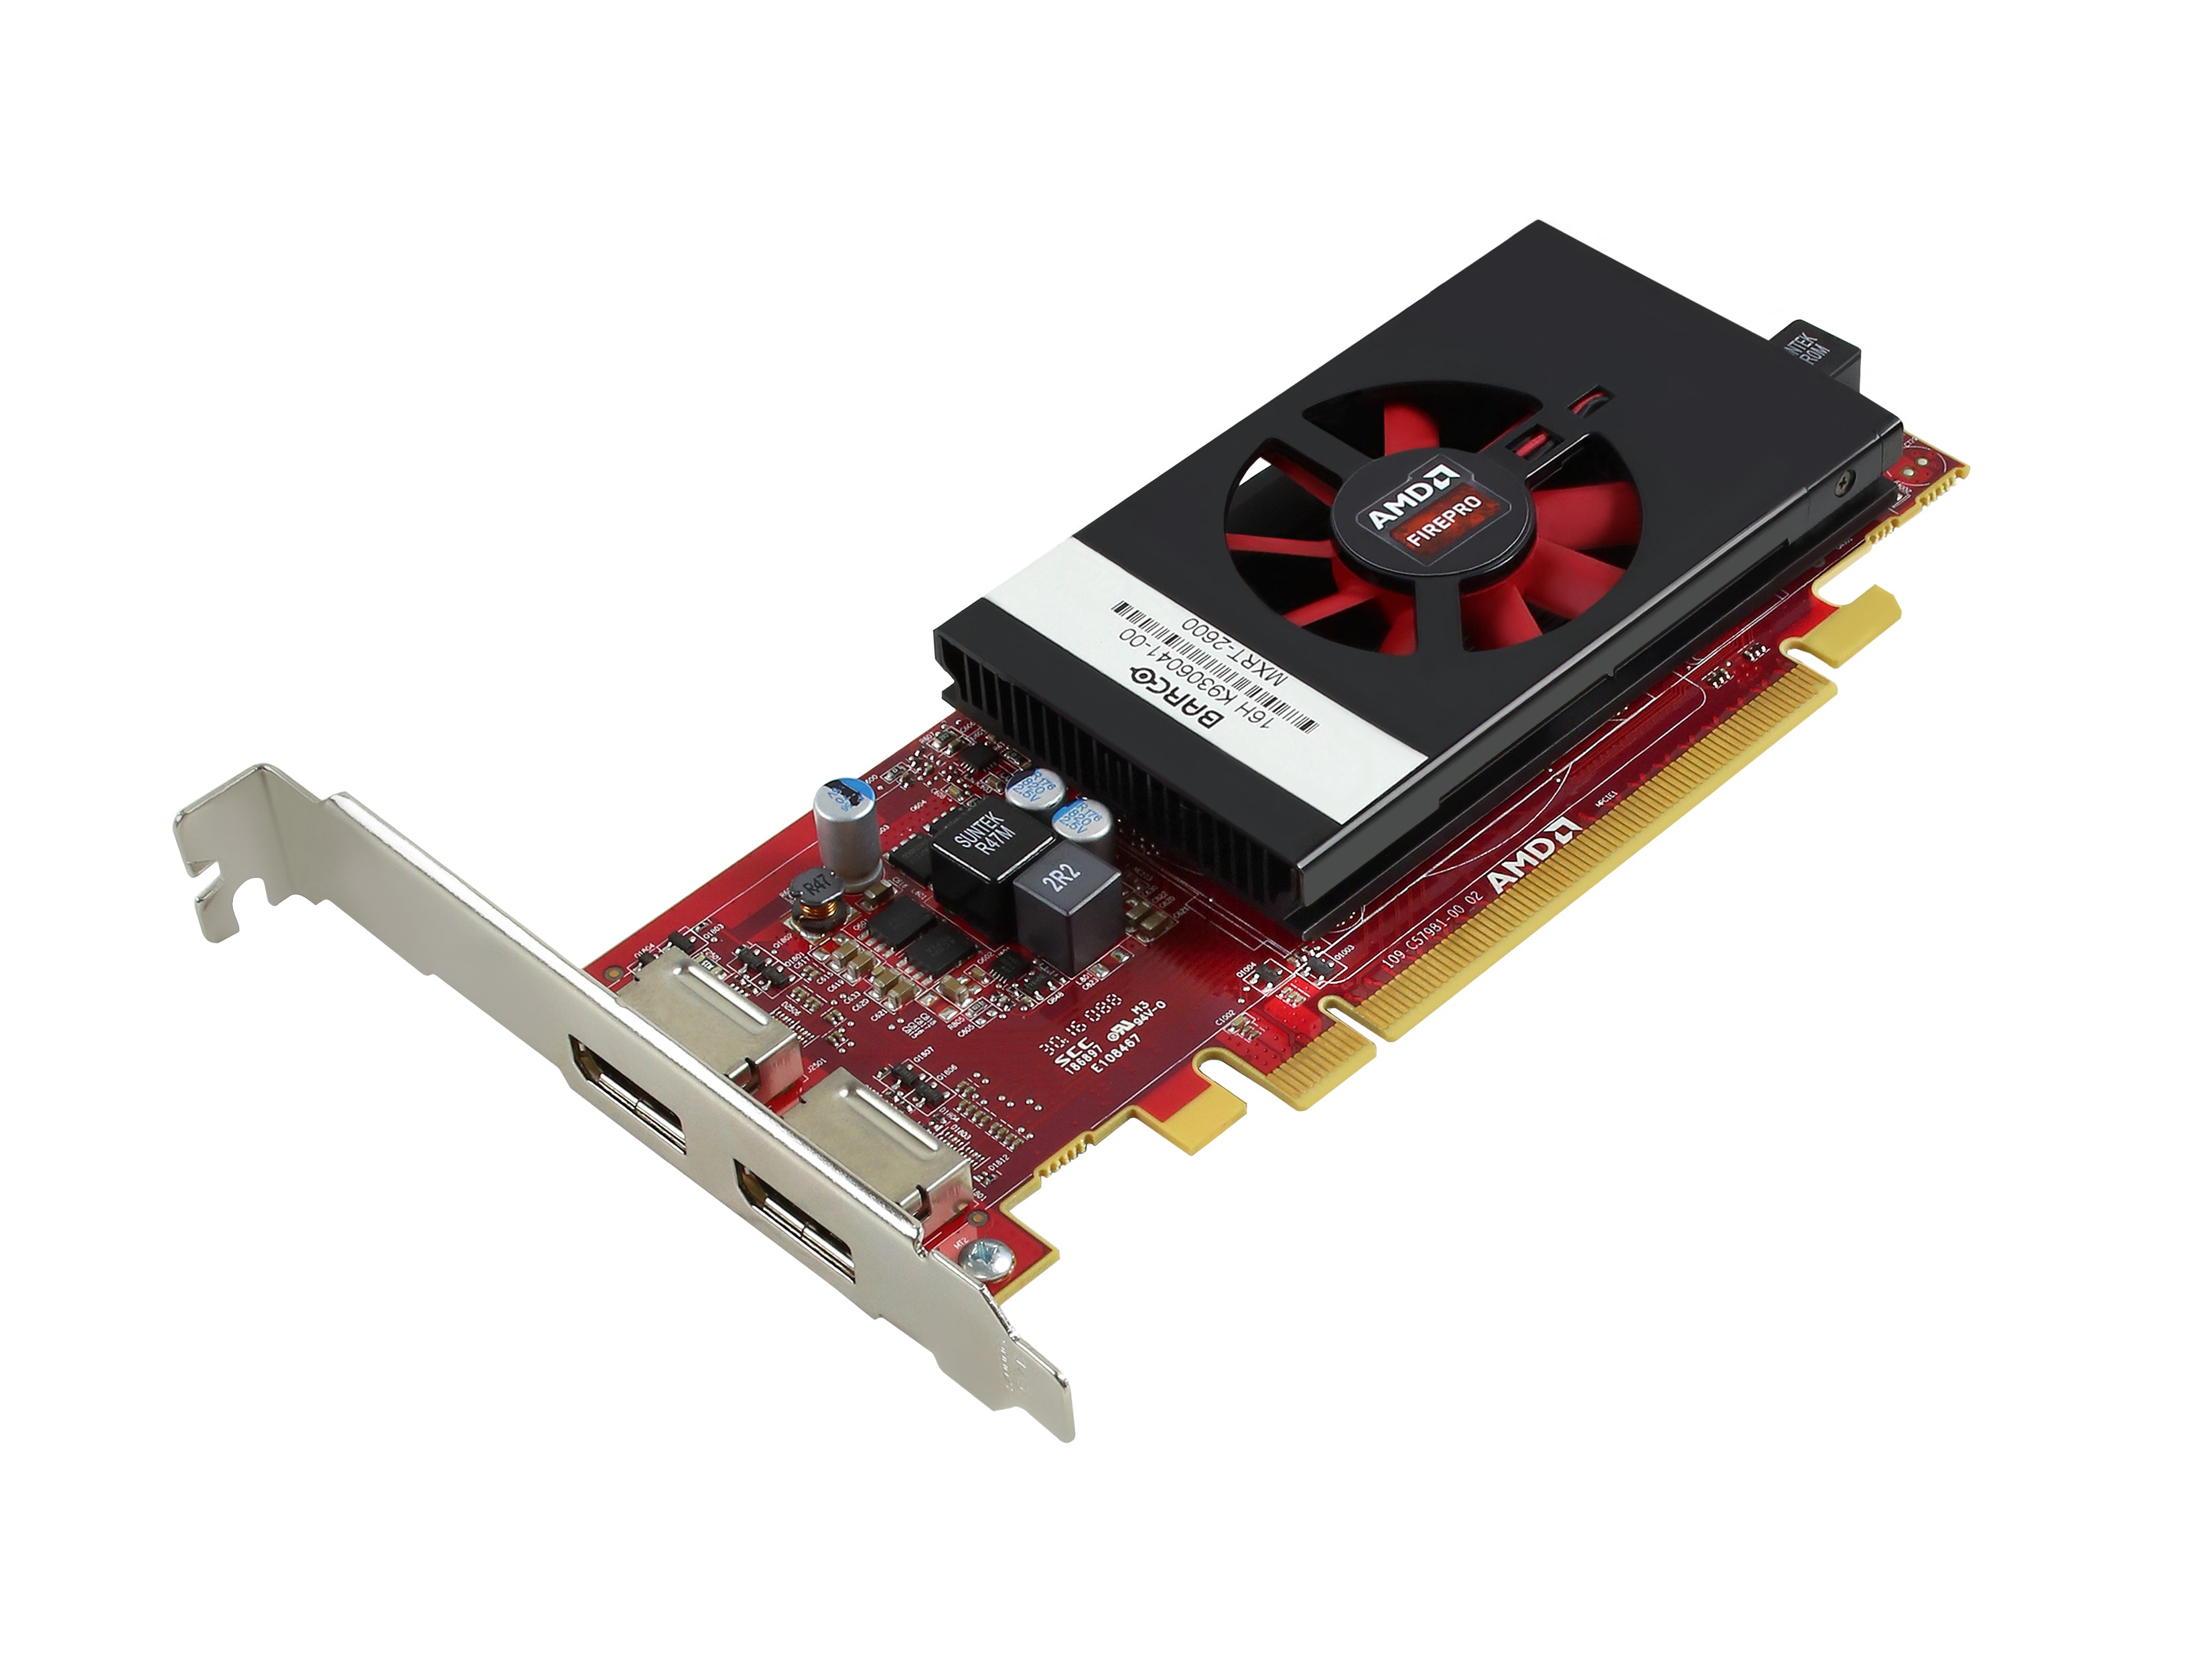 Barco MXRT-2600 2GB PCIe Graphic Card (K9306041) Monitors.com 